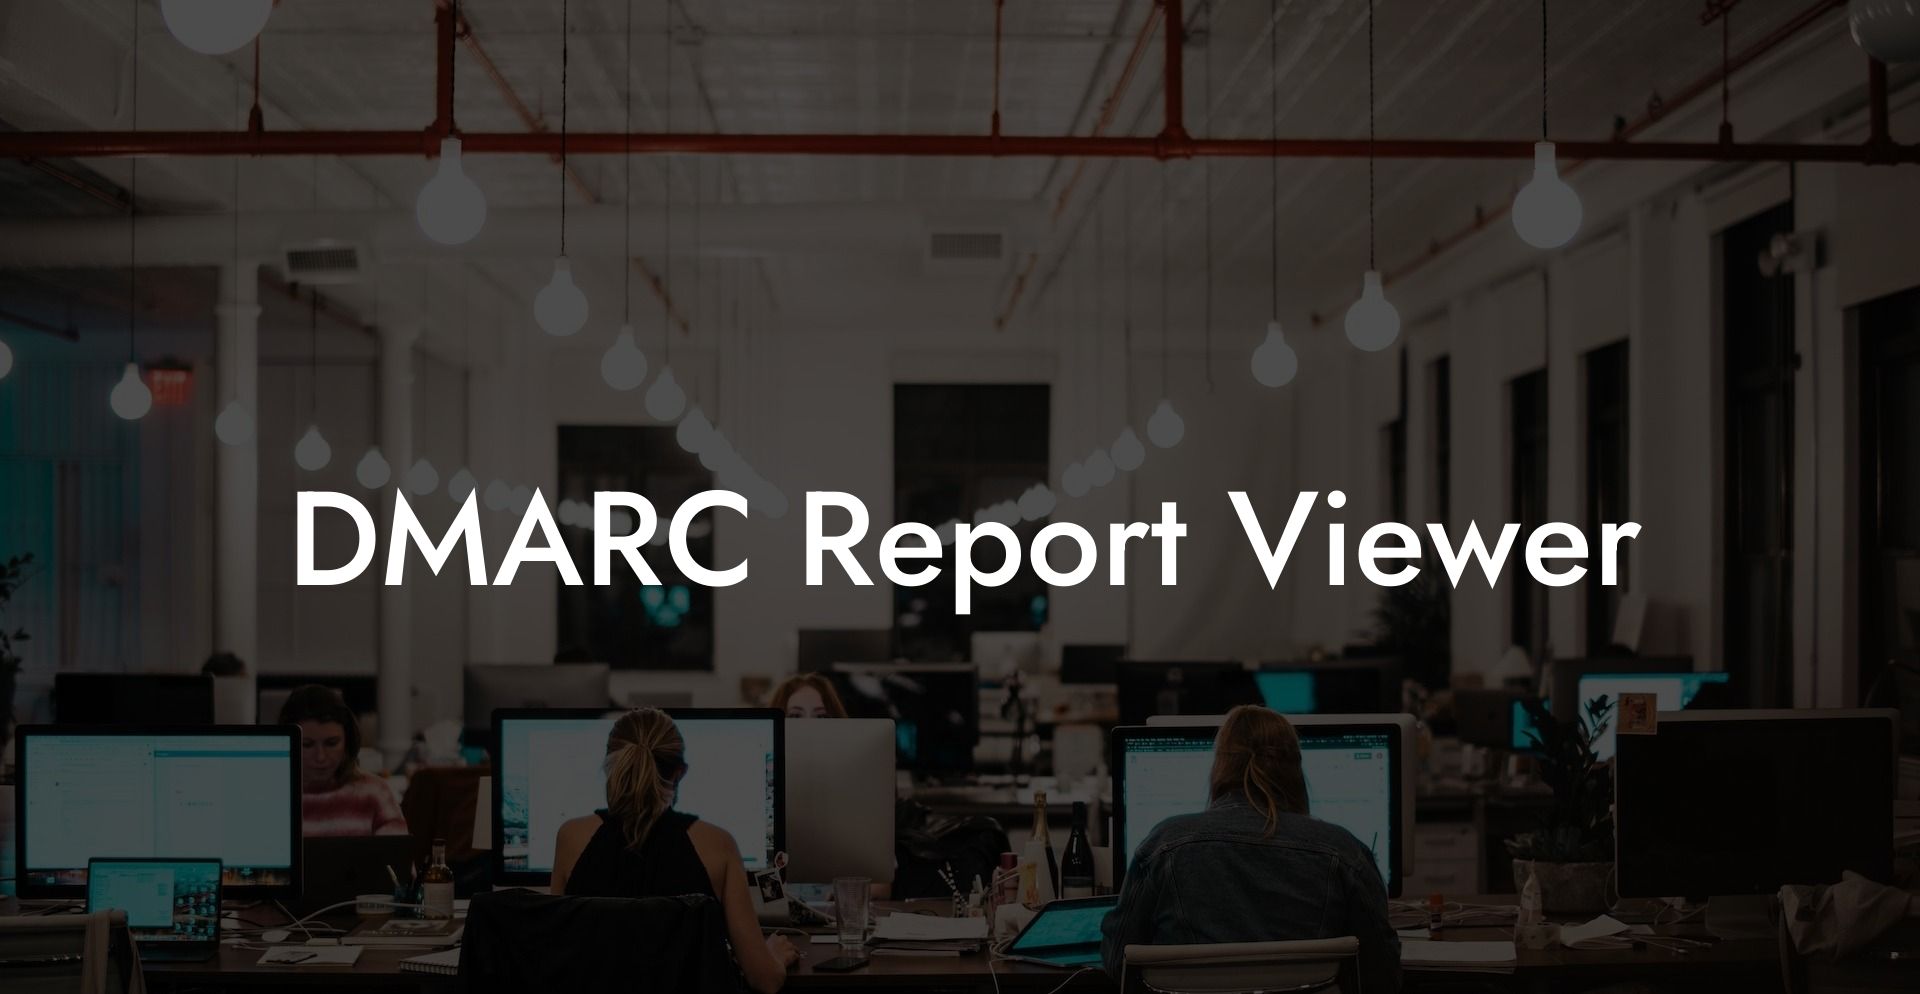 DMARC Report Viewer